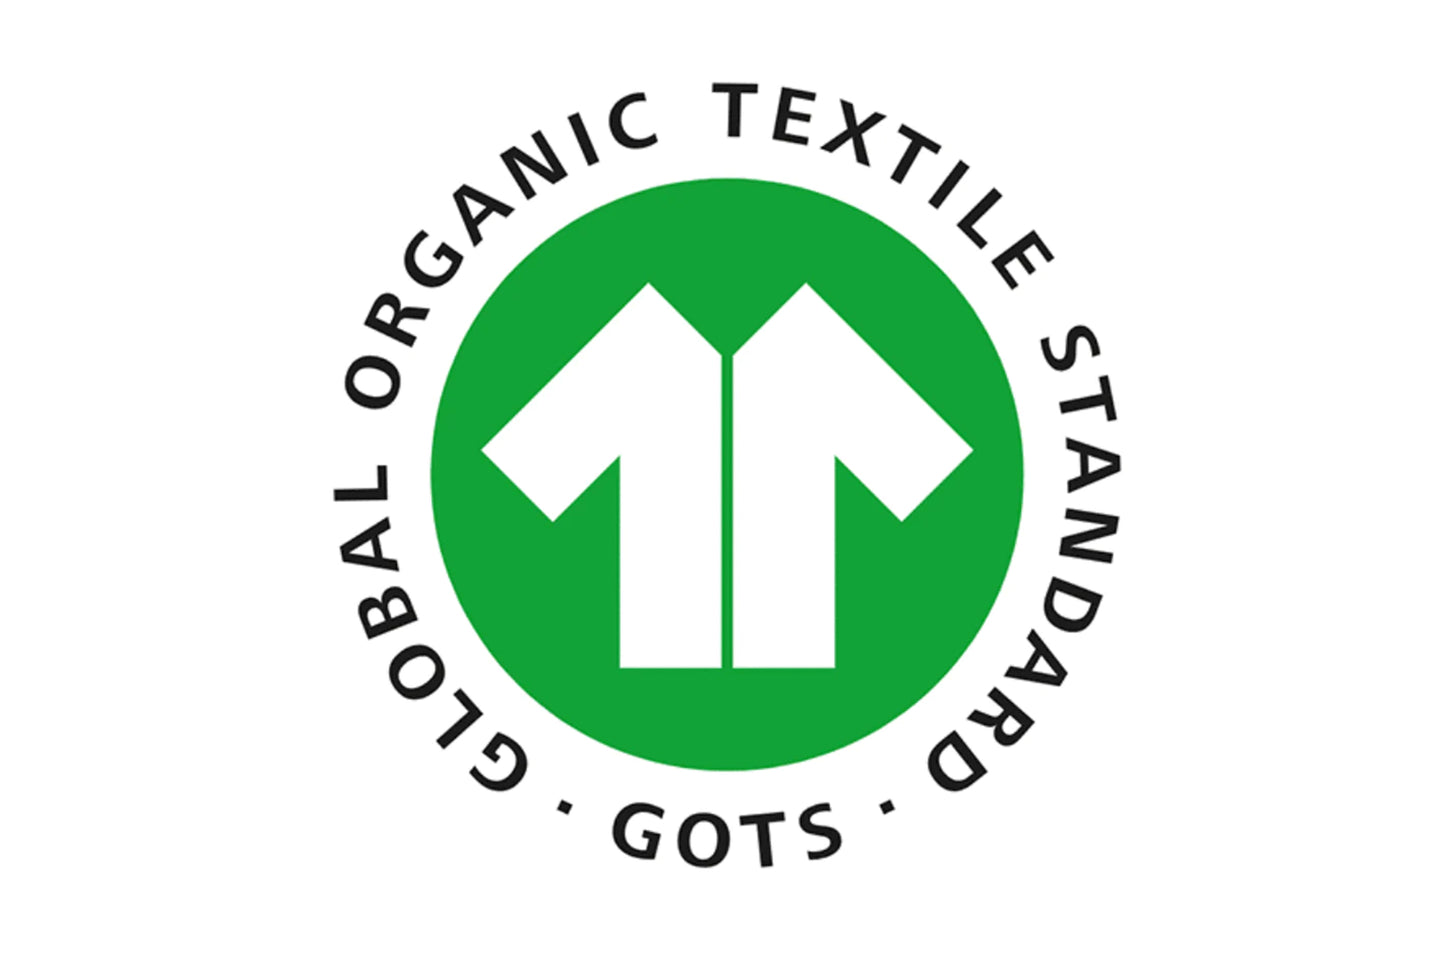 12mm stripe ribbon/ tape in 100% organic cotton